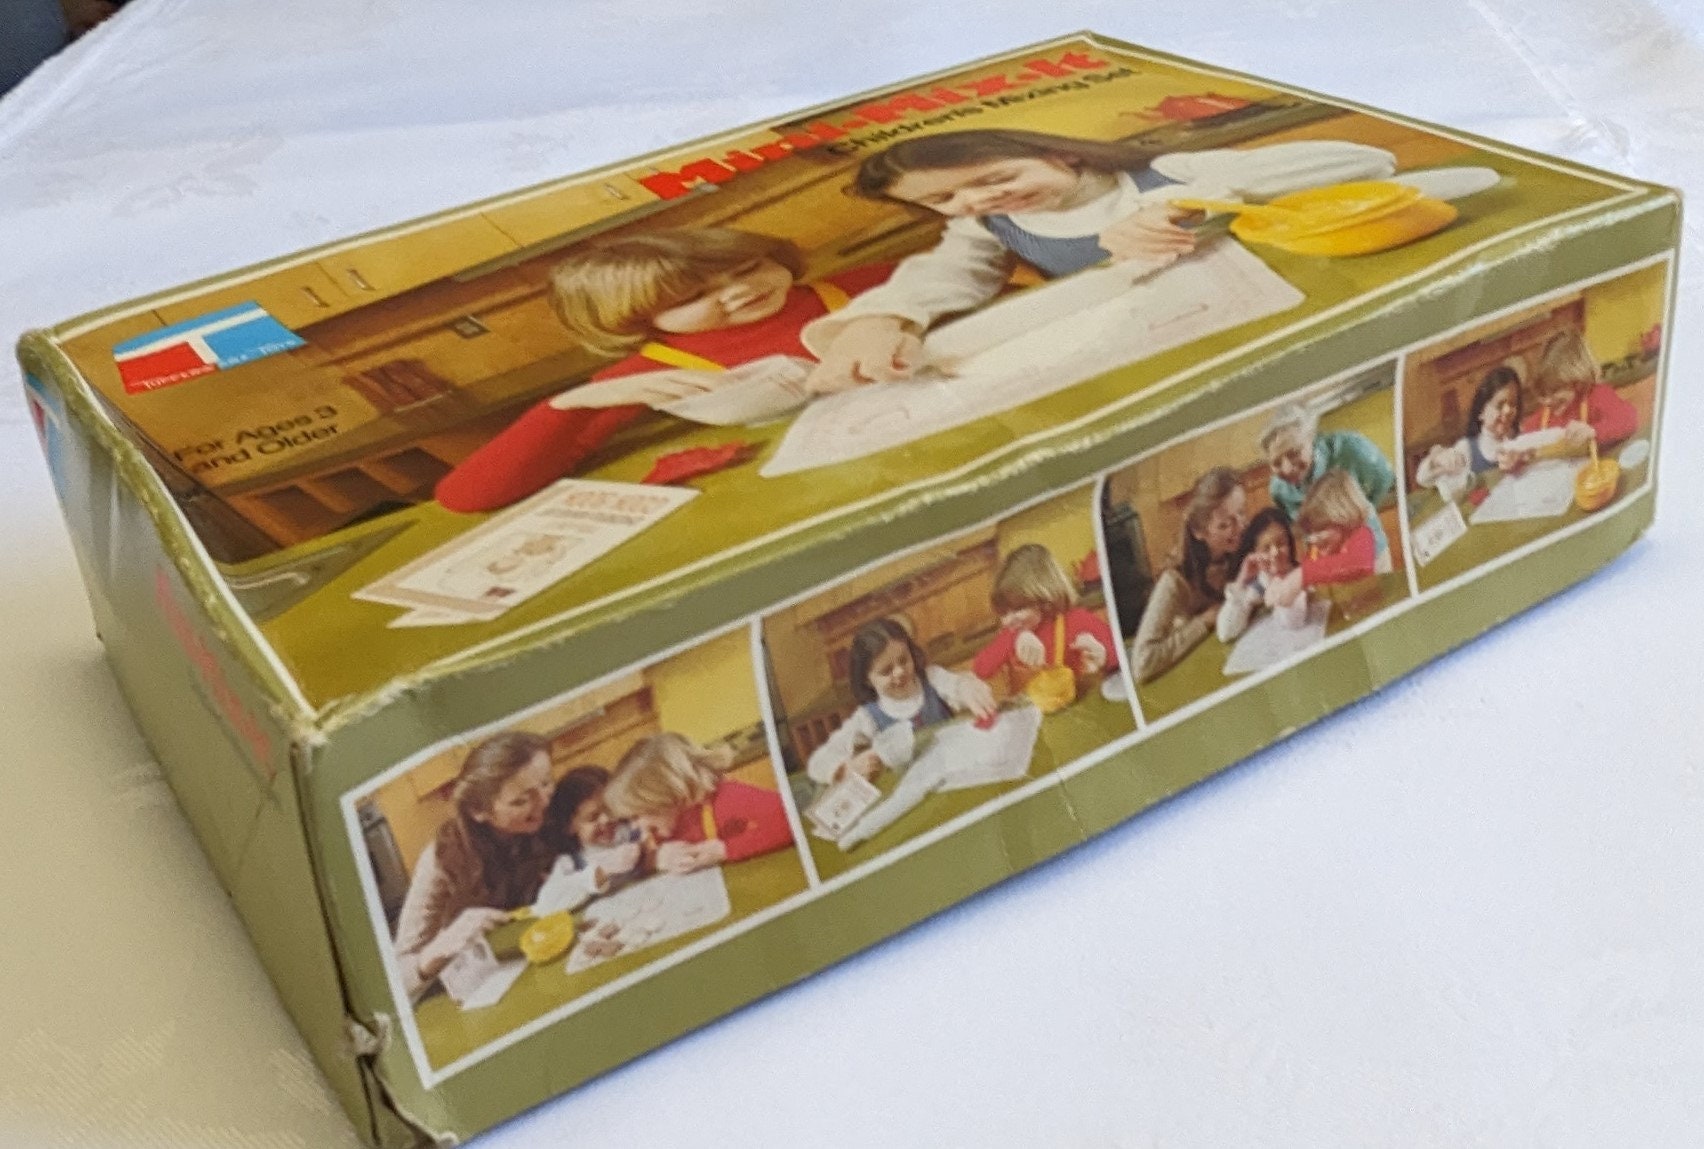 Darling 1979 Tupperware Toy Mini Mix-It Set in Original Box Bottom